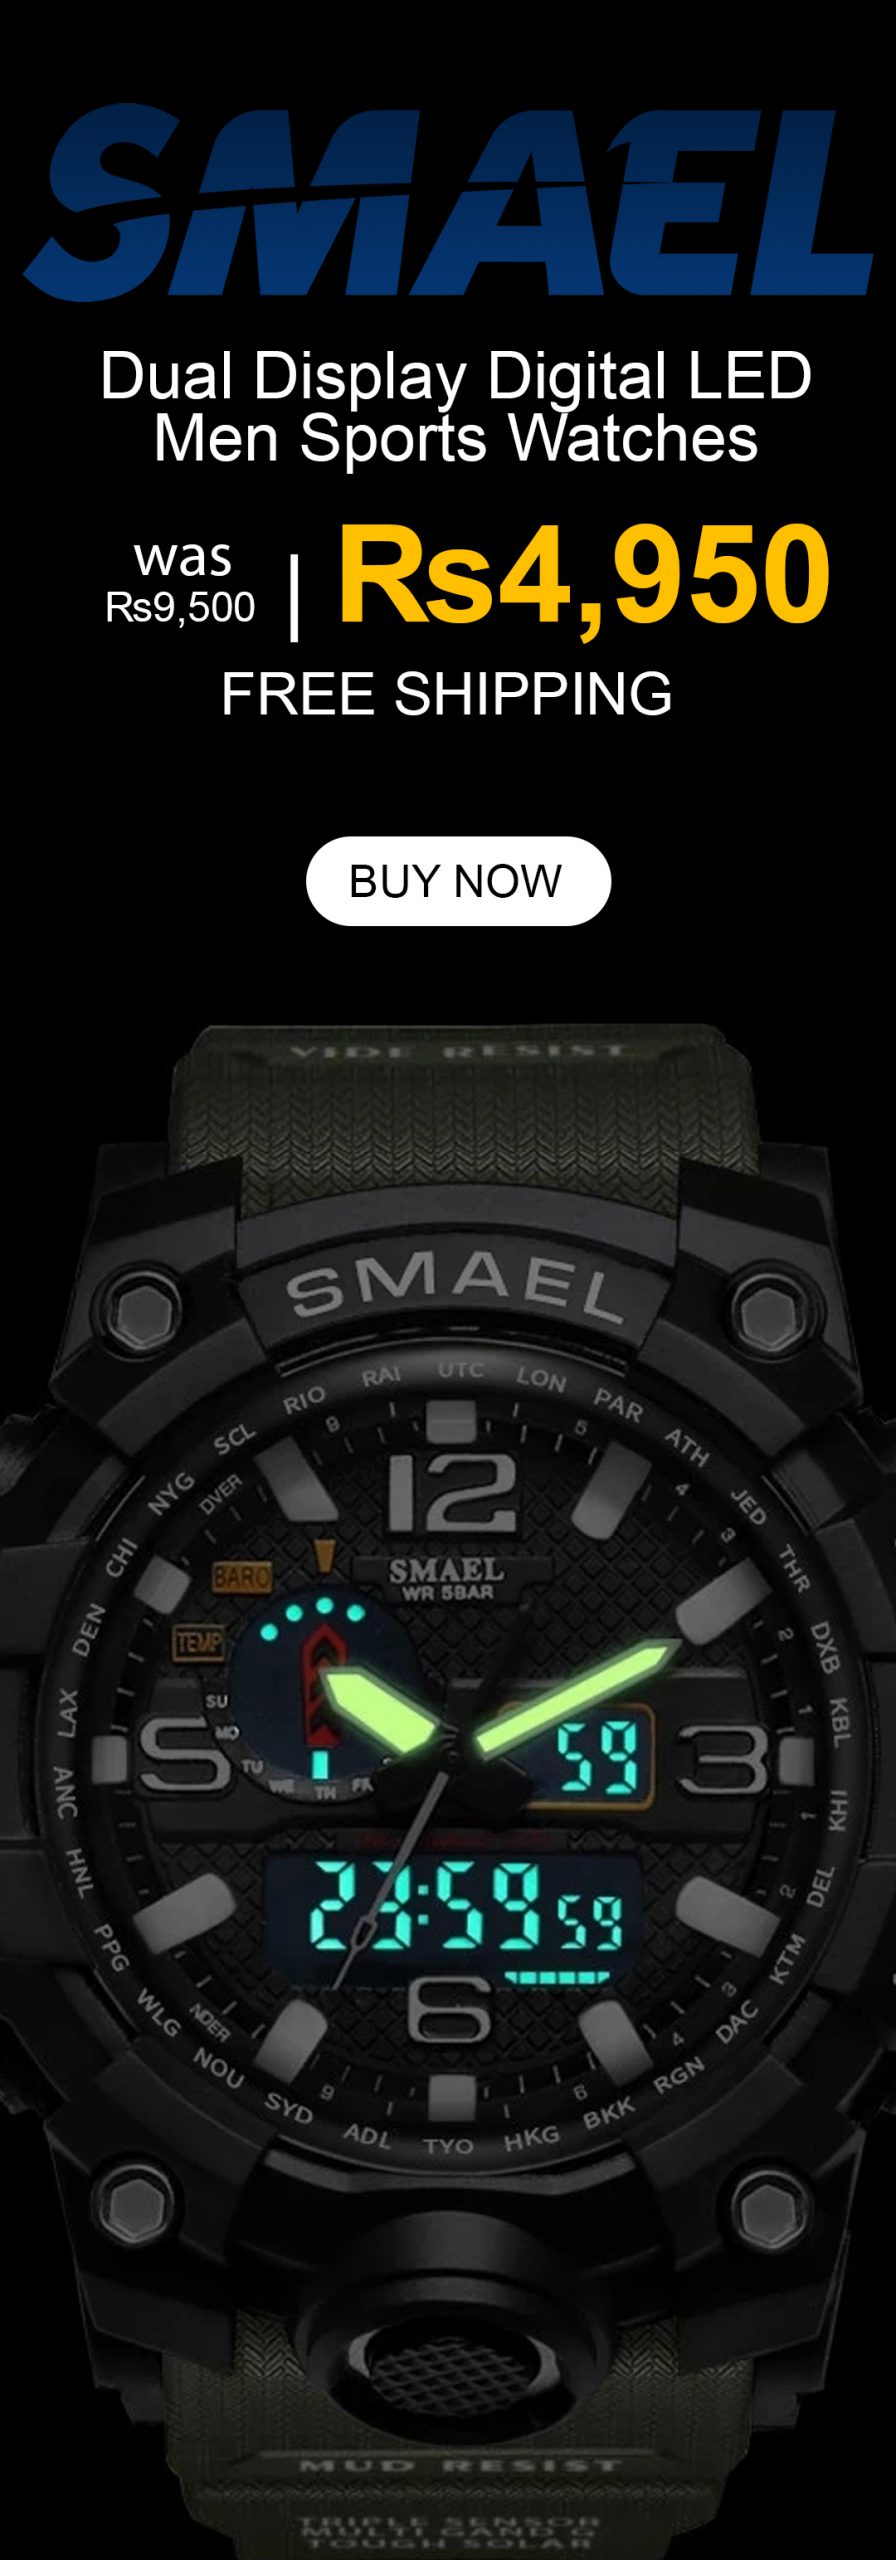 SMAEL Dual Display Digital LED Men Sports Watches